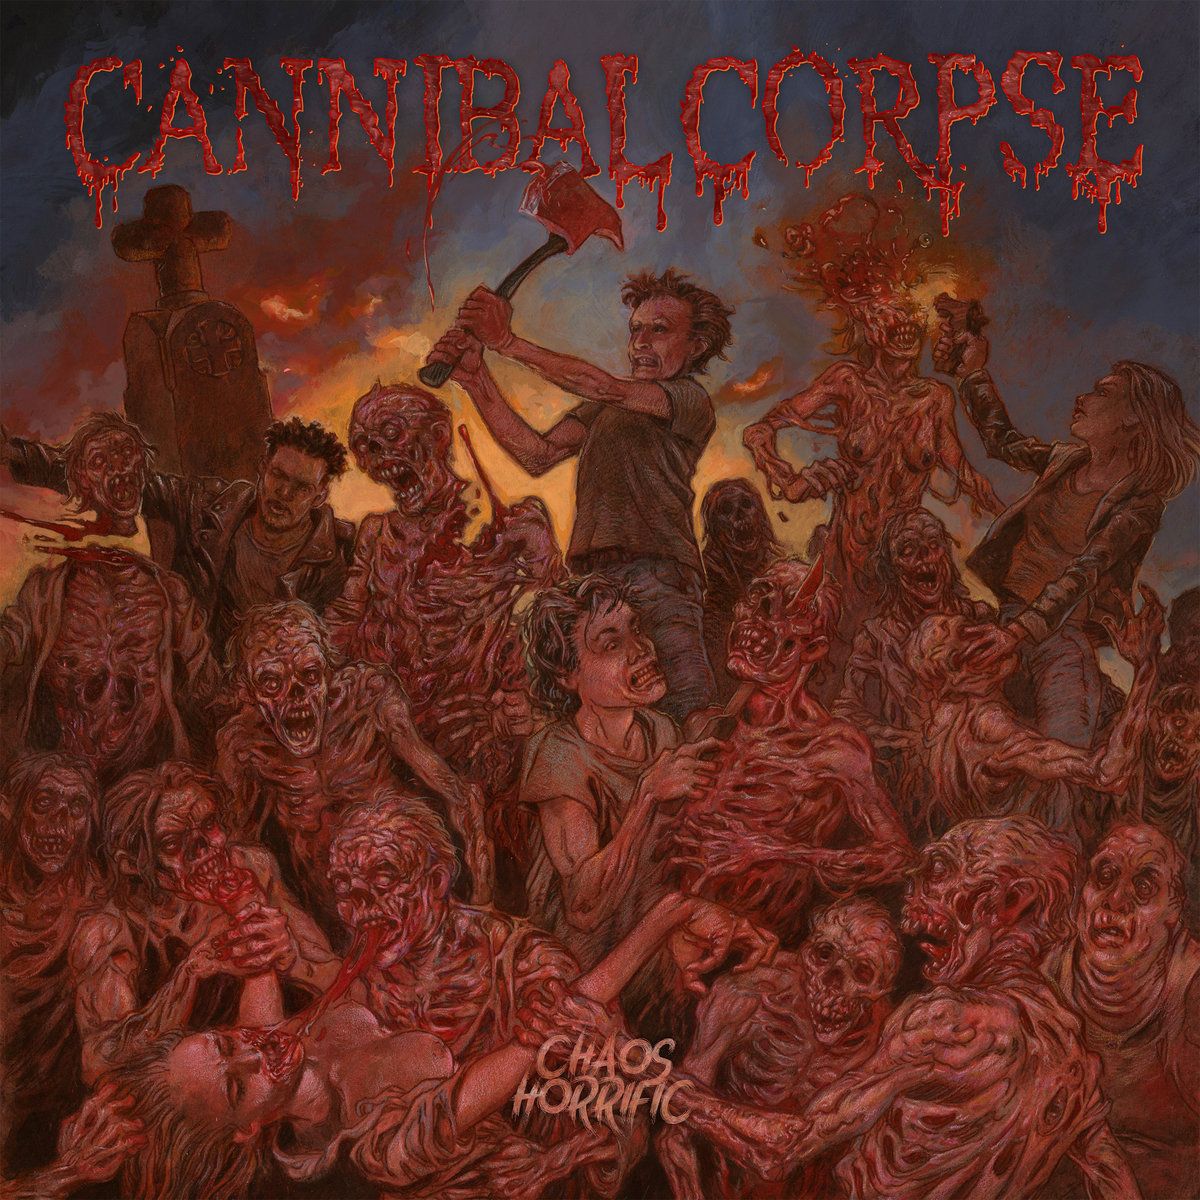 Cannibal Corpse - Chaos Horrific - CD - New